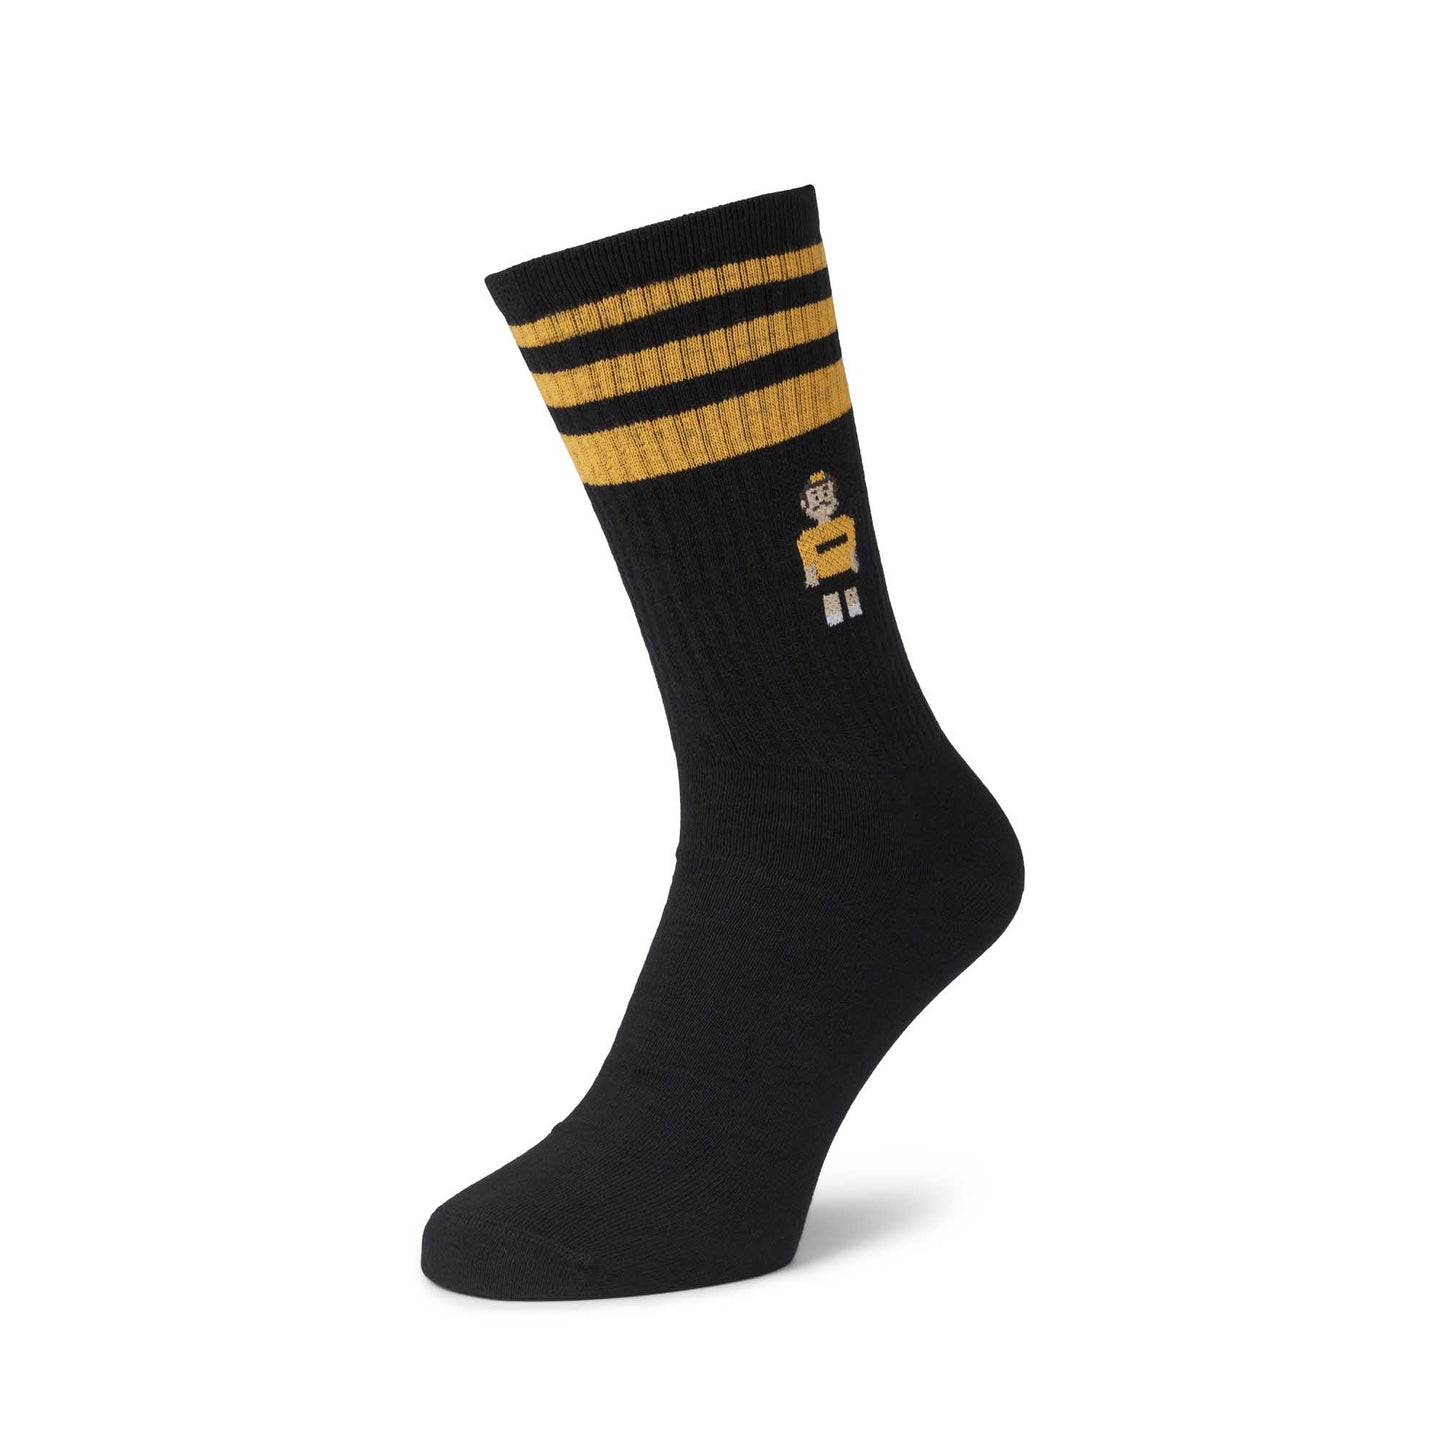 oTTo sport socks black/yellow